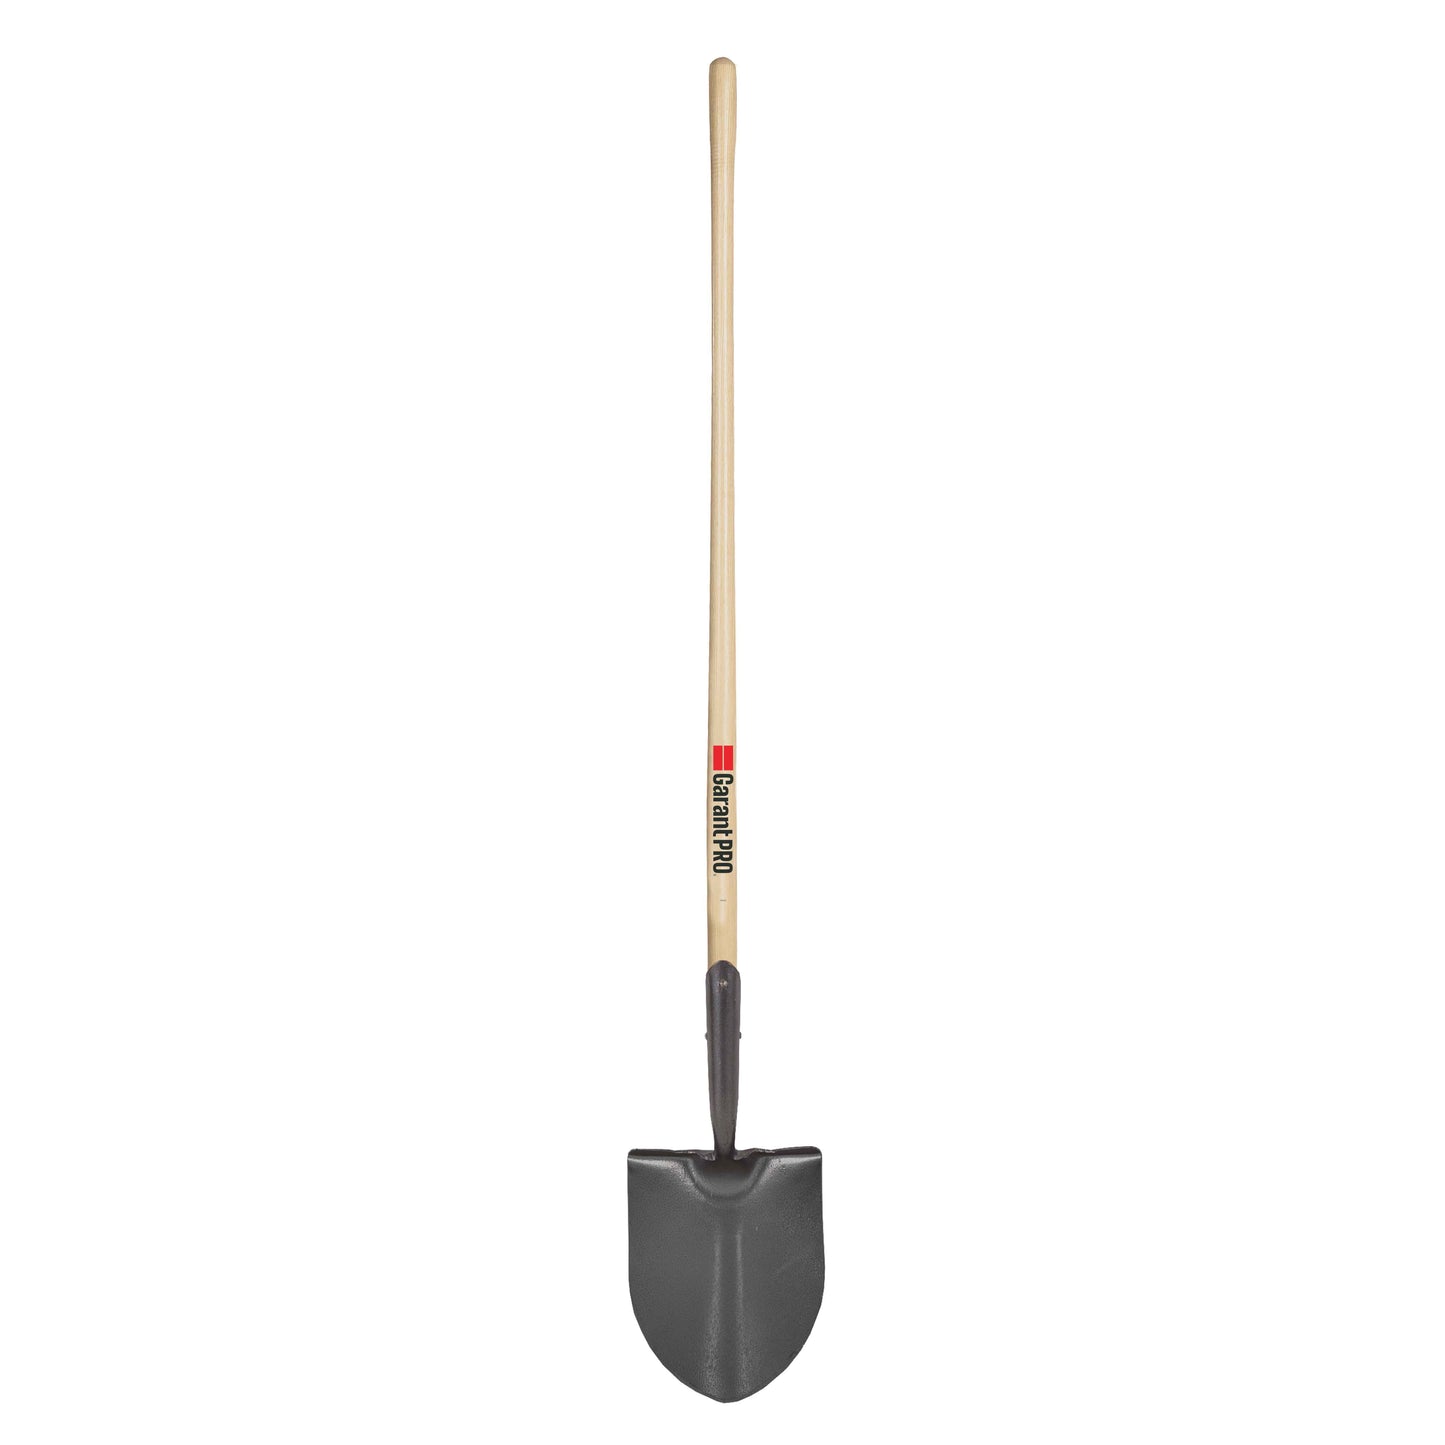 Round point shovel, long wood handle